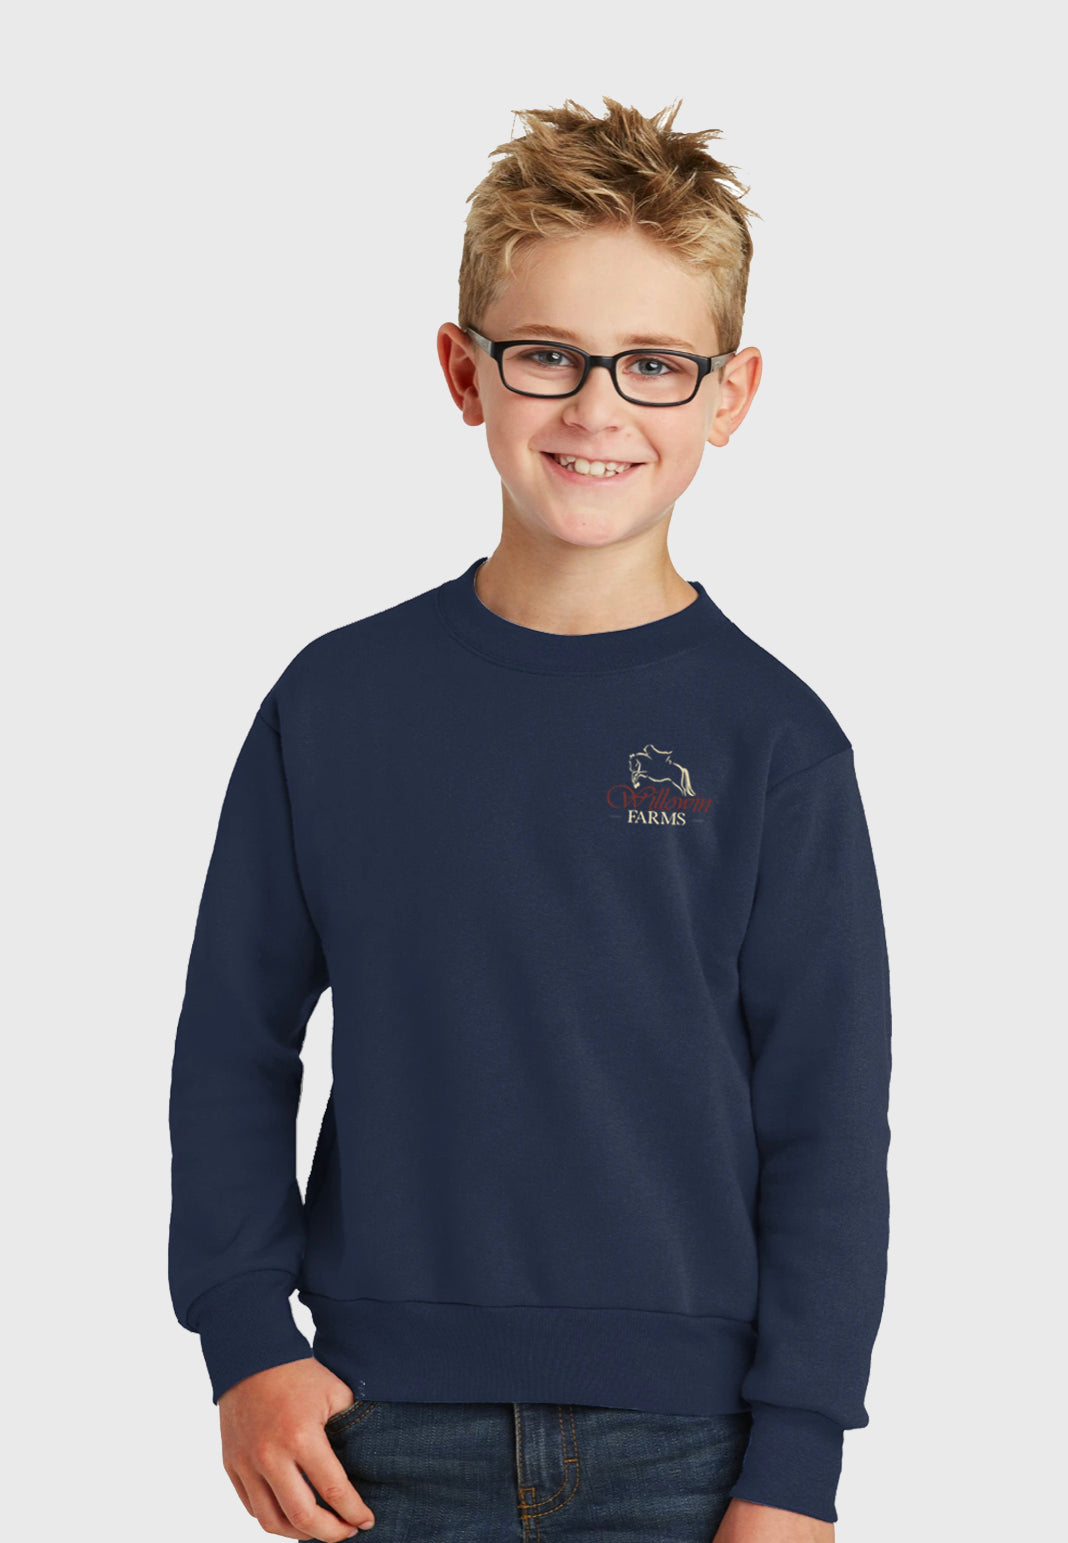 Willowin Farms Port & Company® Youth Essential Fleece Crewneck Sweatshirt - Navy, Maroon, or White